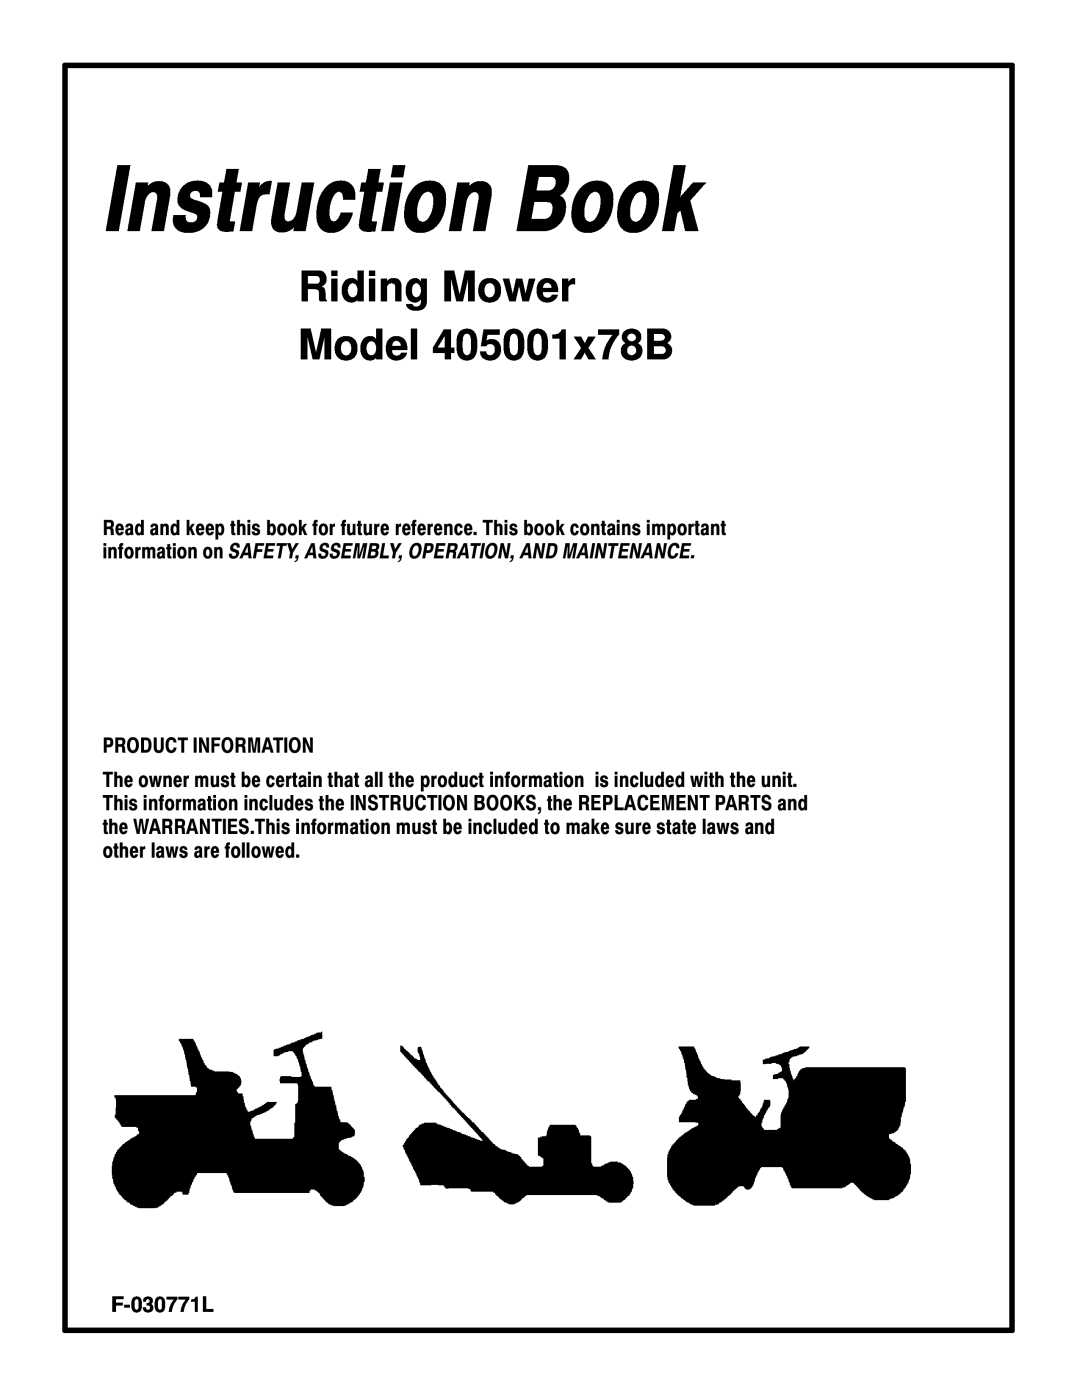 Murray manual F-030771L, Instruction Book, Riding Mower Model 405001x78B 